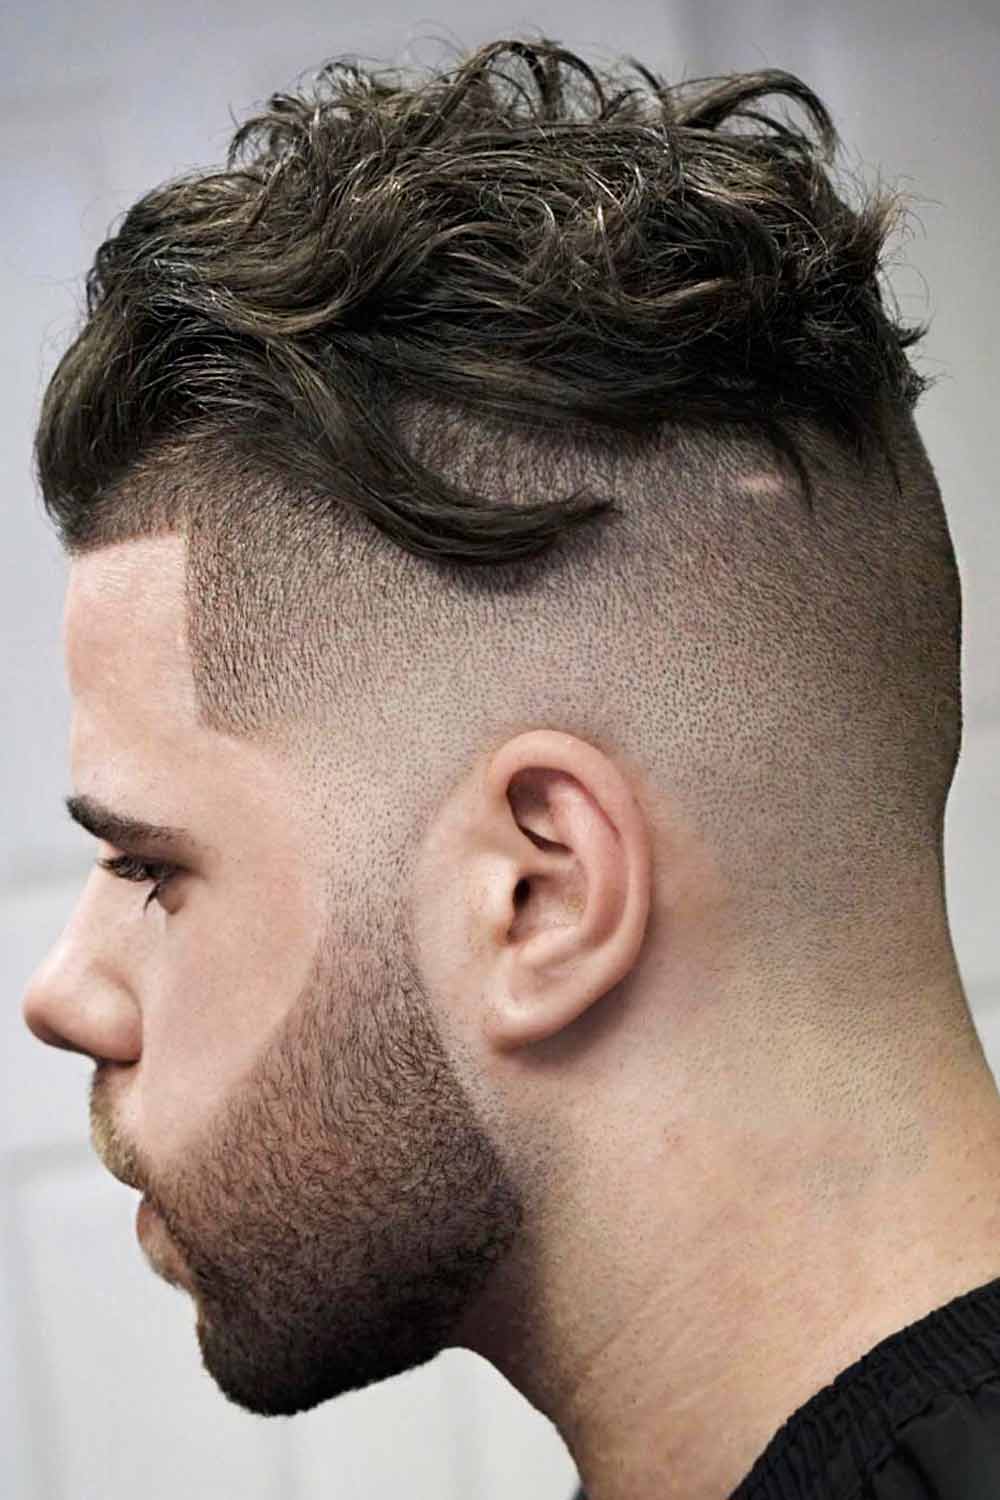 Undercut #typesofhaircutsmen #typesofhaircuts #haircutsmen #hairstylesmen